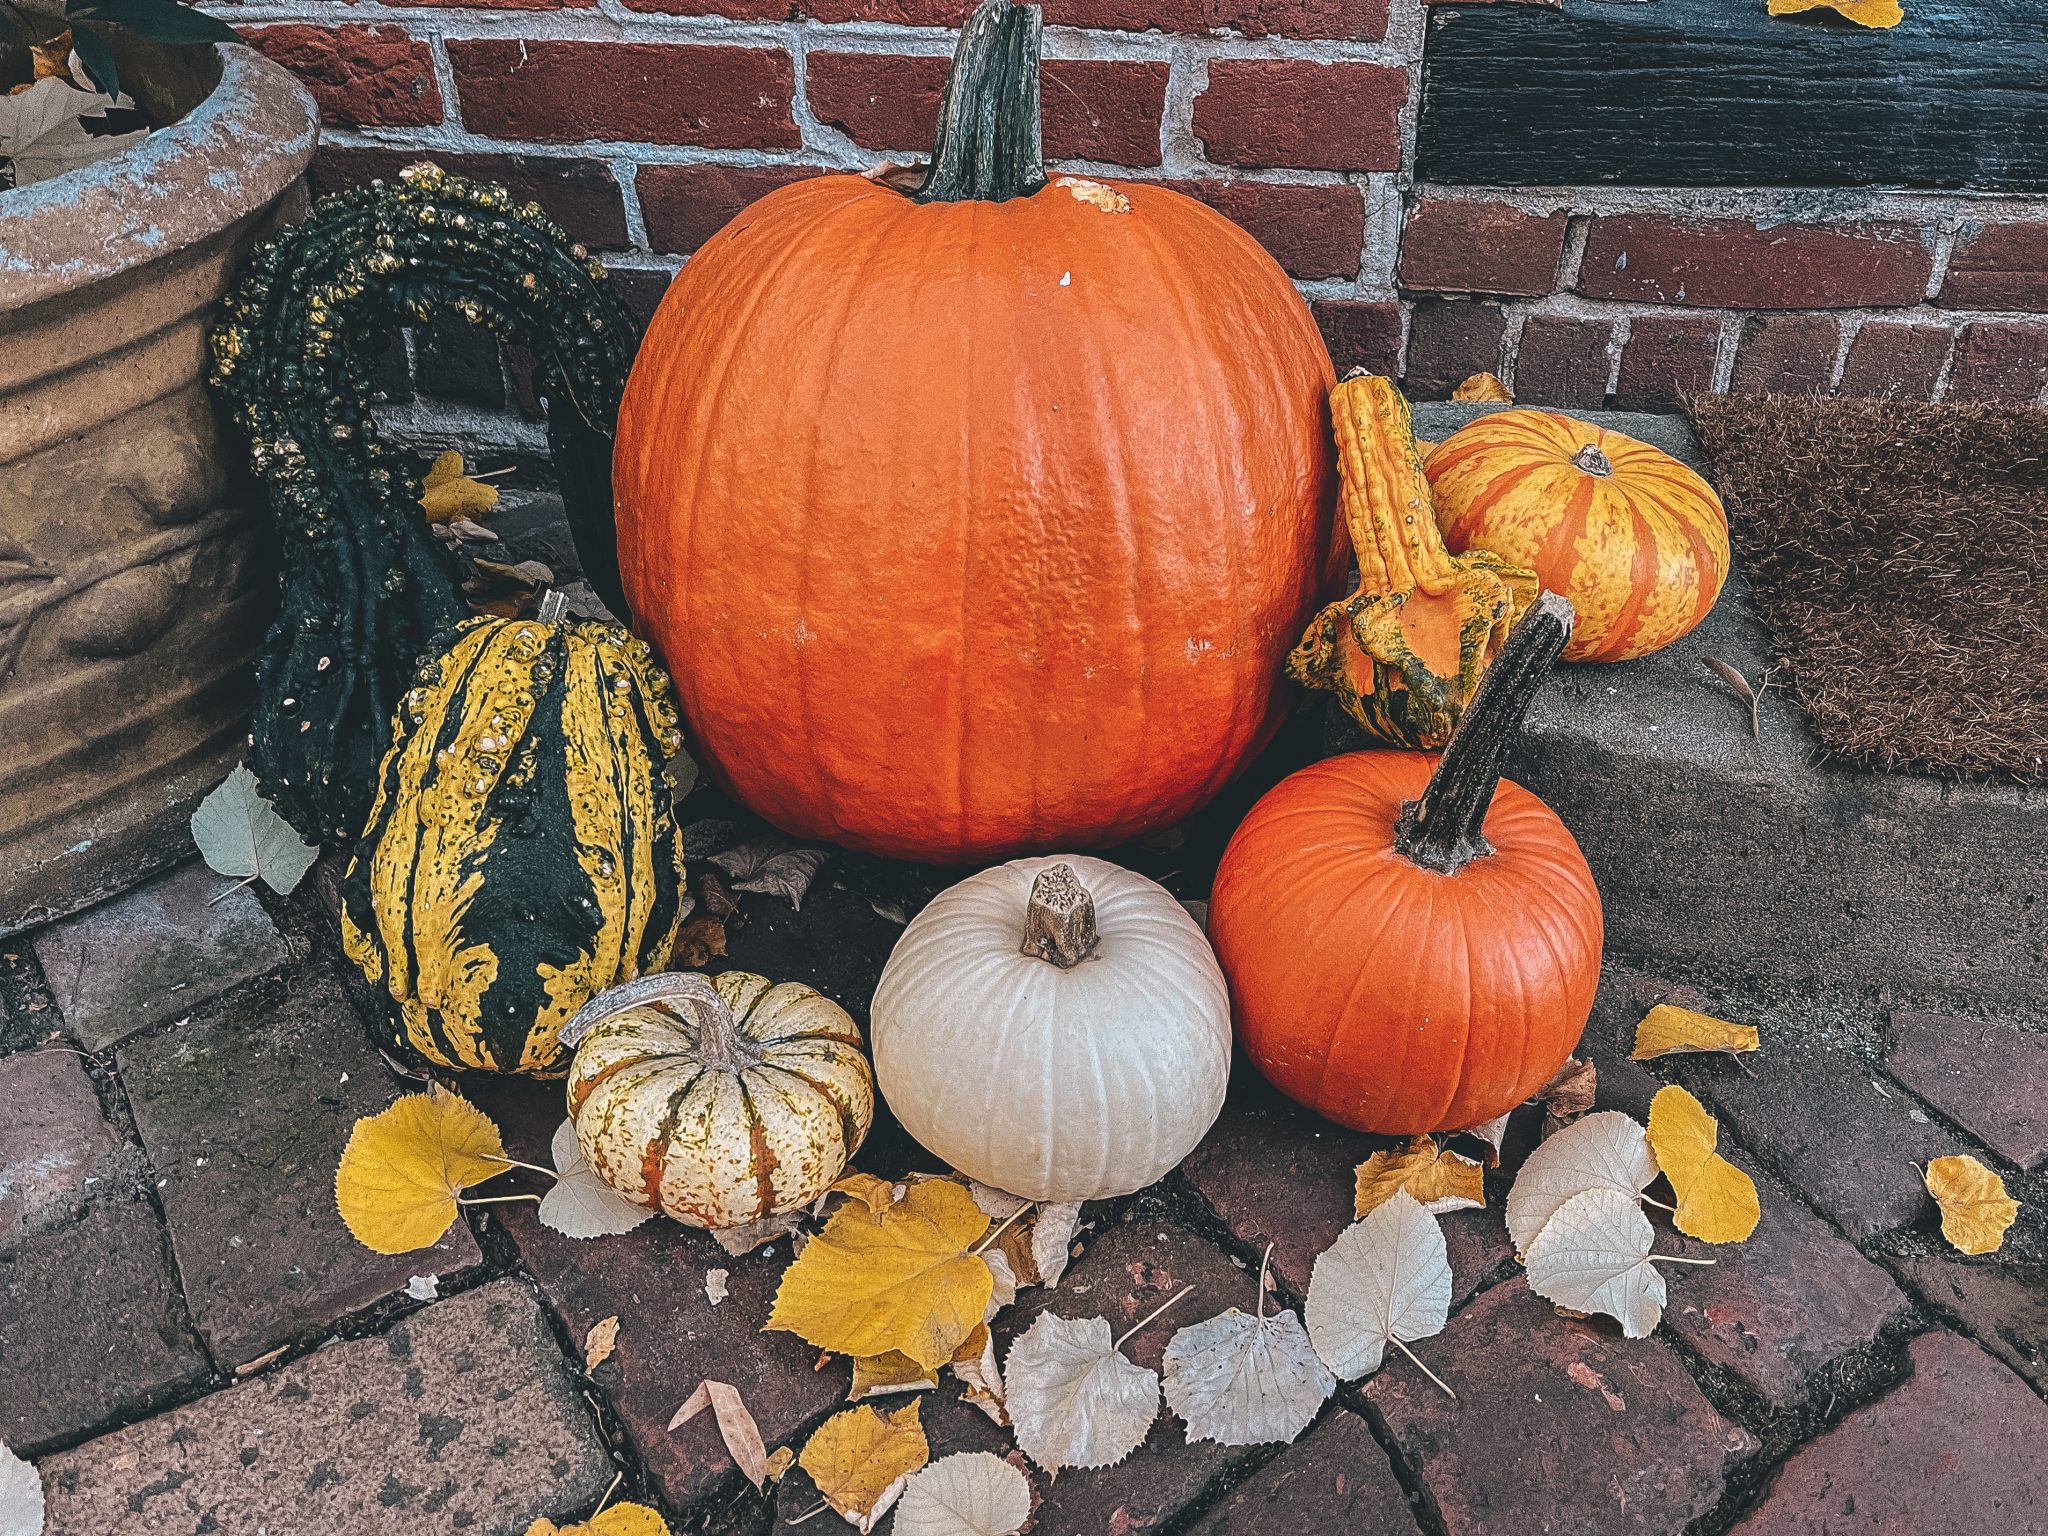 Pumpkin decorations for fall on sidewalk